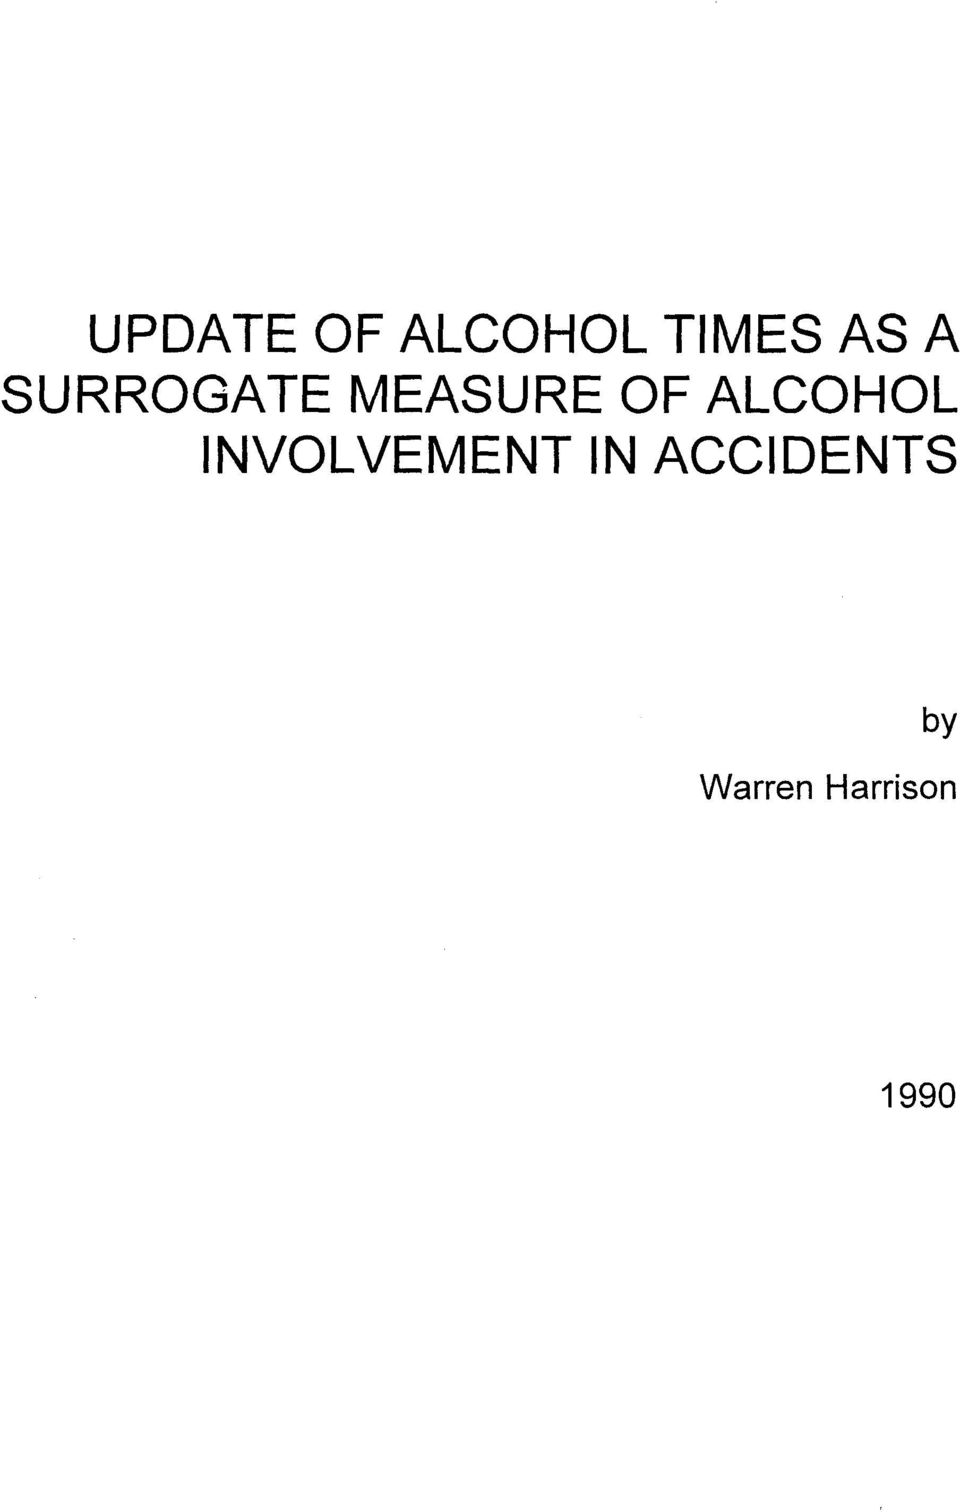 ALCOHOL INVOLVEMENT IN